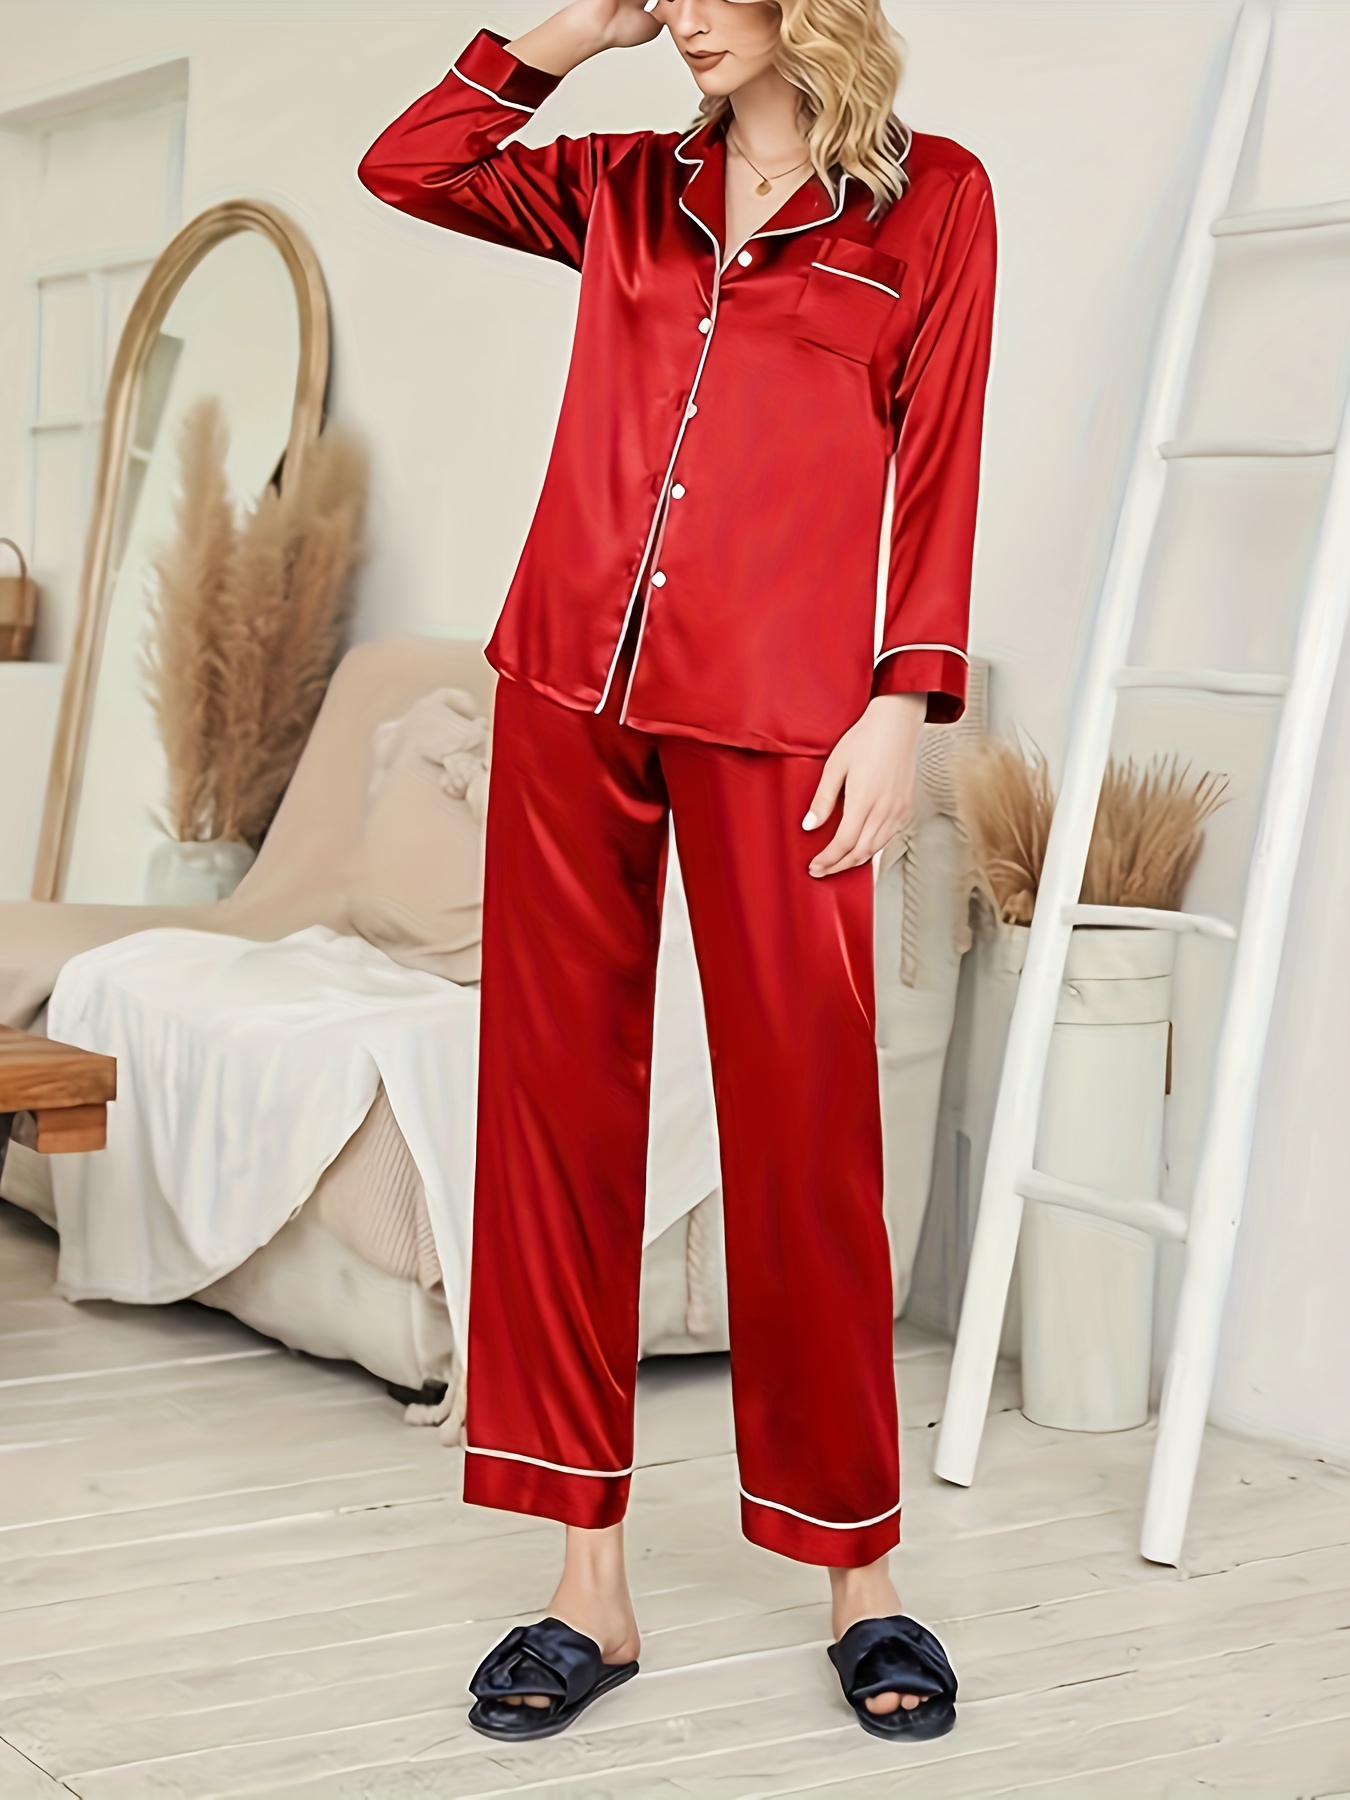 Soft Satin Space Pajamas Set, Lightweight Button Up Blouse Pajama Top &  Elastic Waistband Pajama Pants, Women's Loungewear & Sleepwear